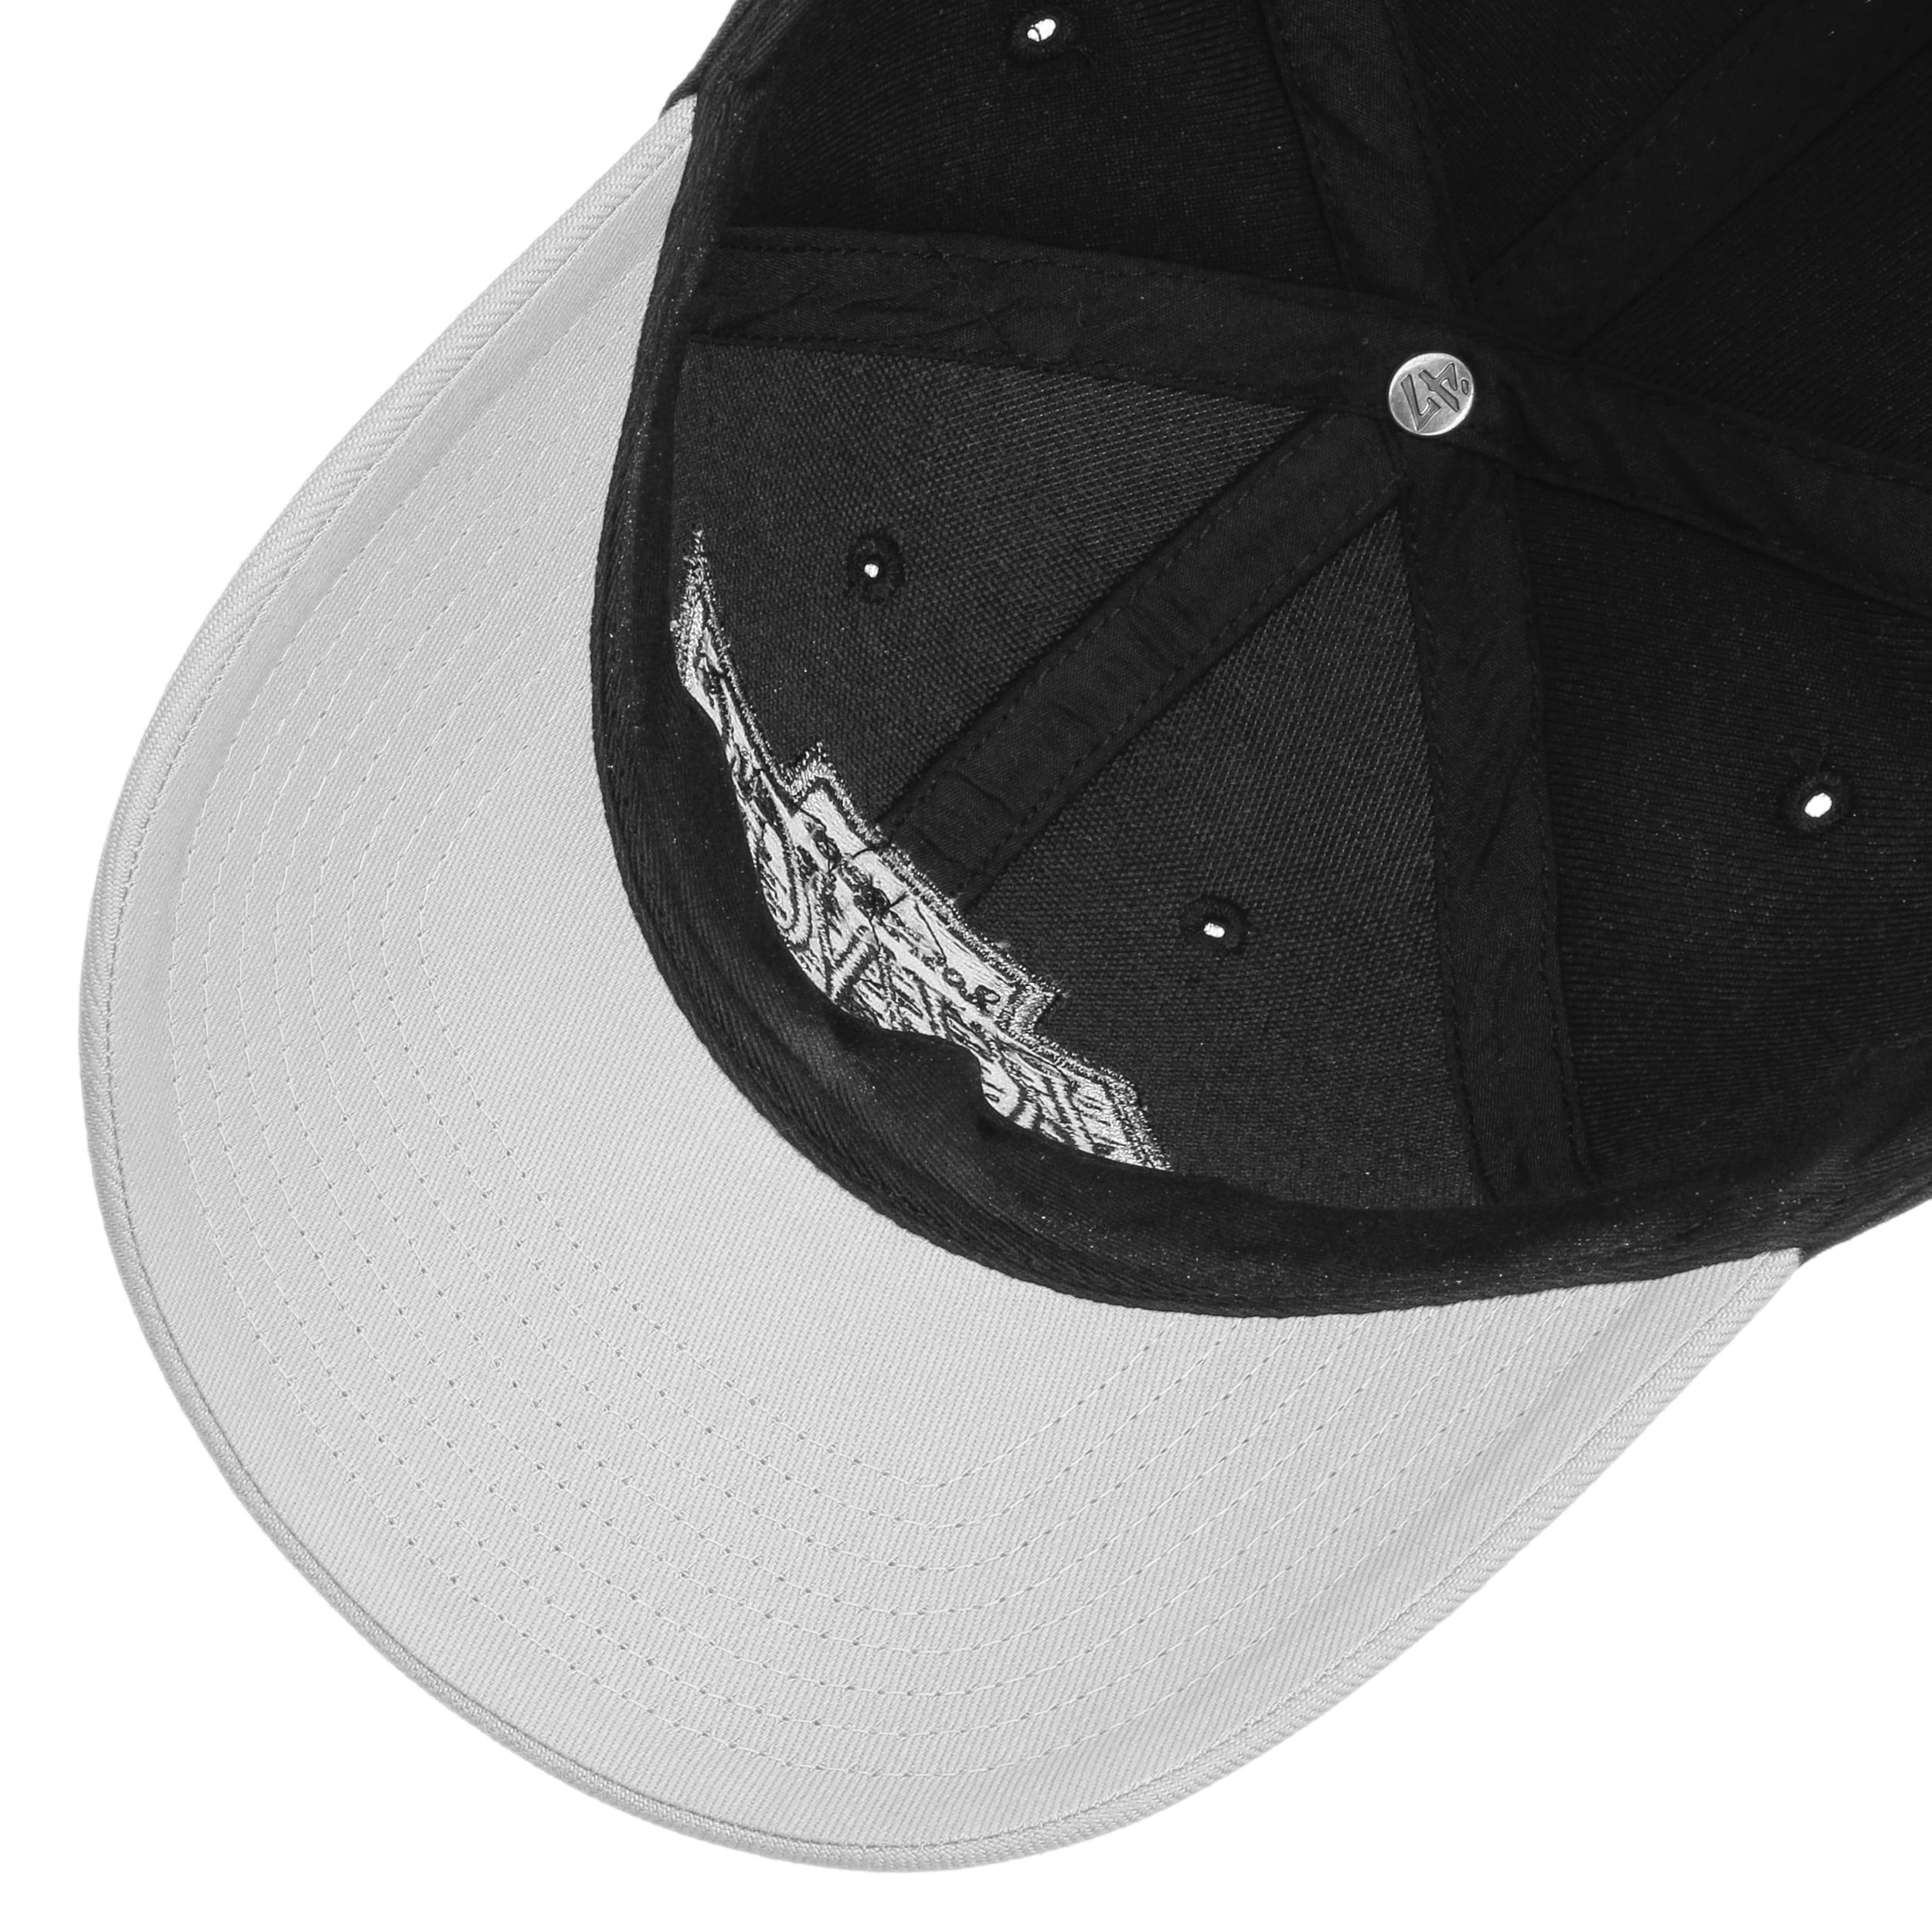 NHL Los Angeles Kings '47 Clean Up Adjustable Hat, Black, One Size